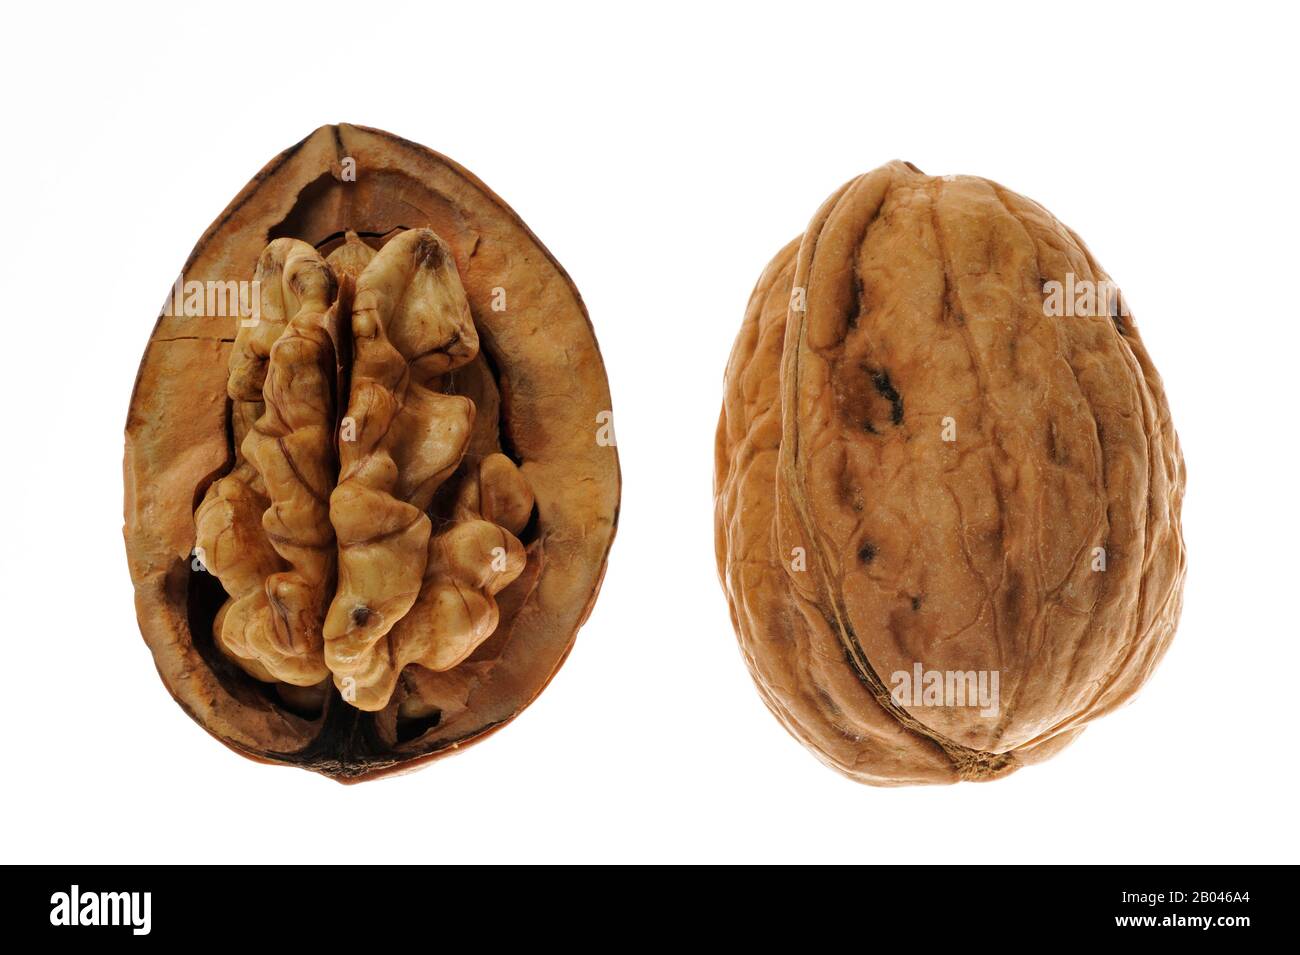 Common walnut / Persian walnut / English walnuts (Juglans regia) native to Southern Europe and Asia on white background Stock Photo